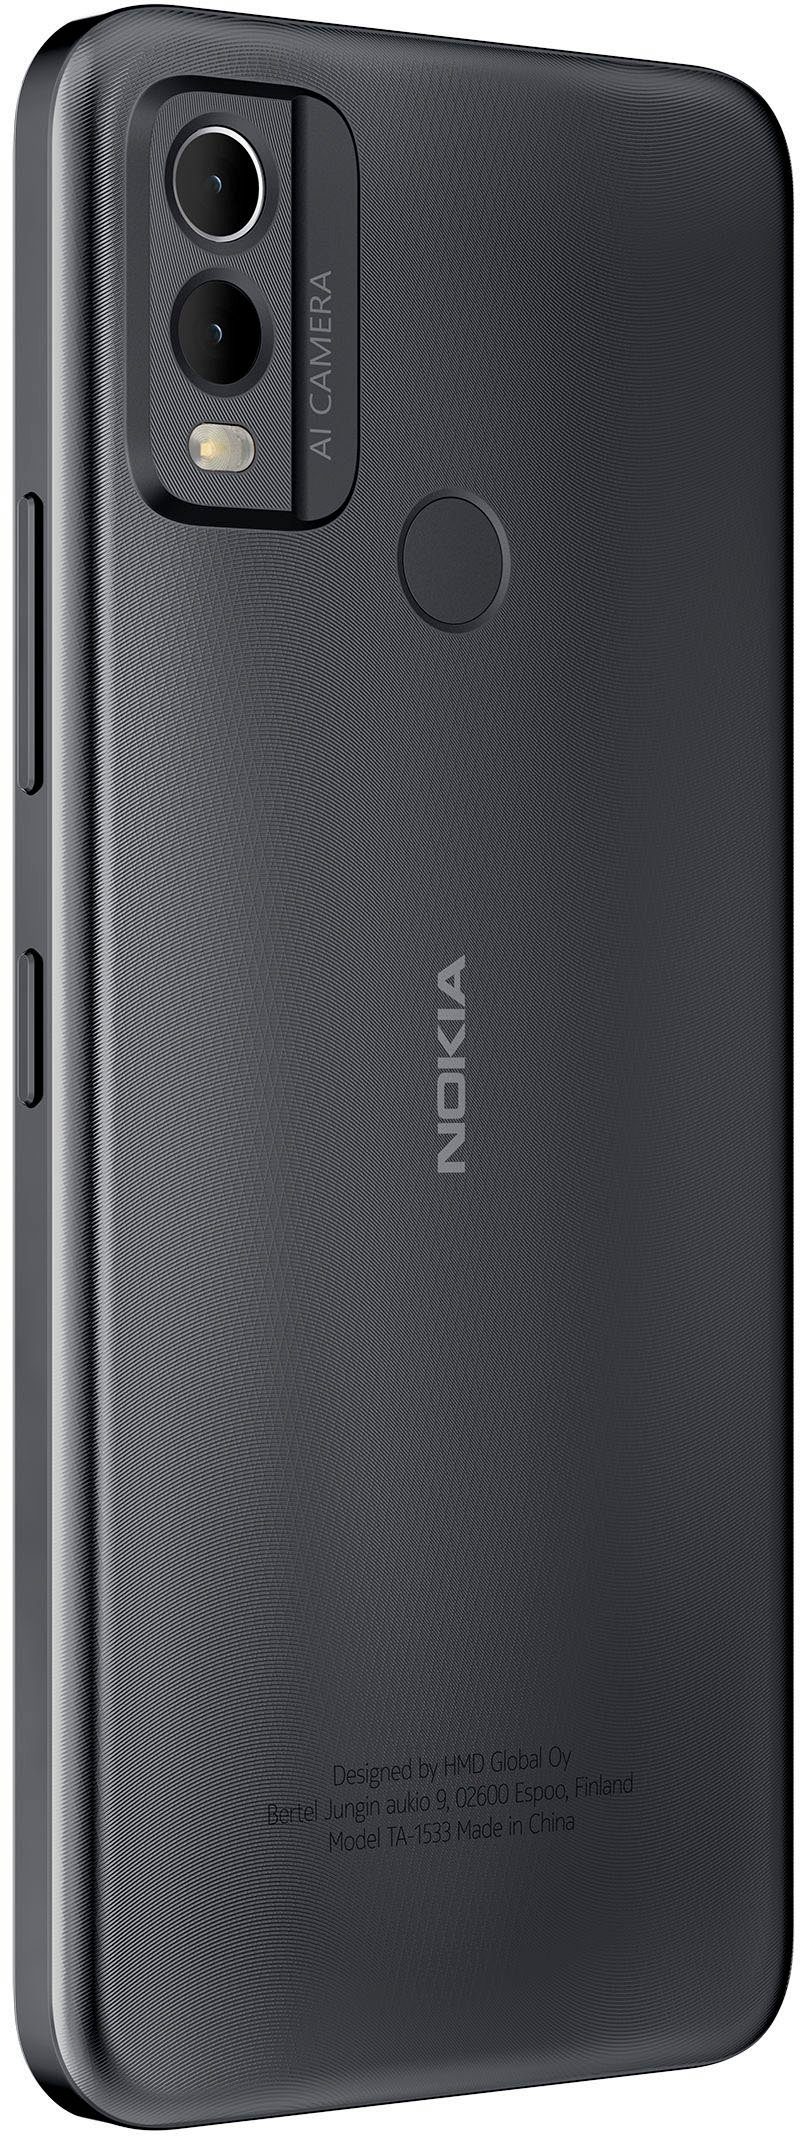 Kamera) (16,56 Nokia MP Black 64 GB cm/6,52 C22, Midnight 2+64GB 13 Speicherplatz, Zoll, Smartphone